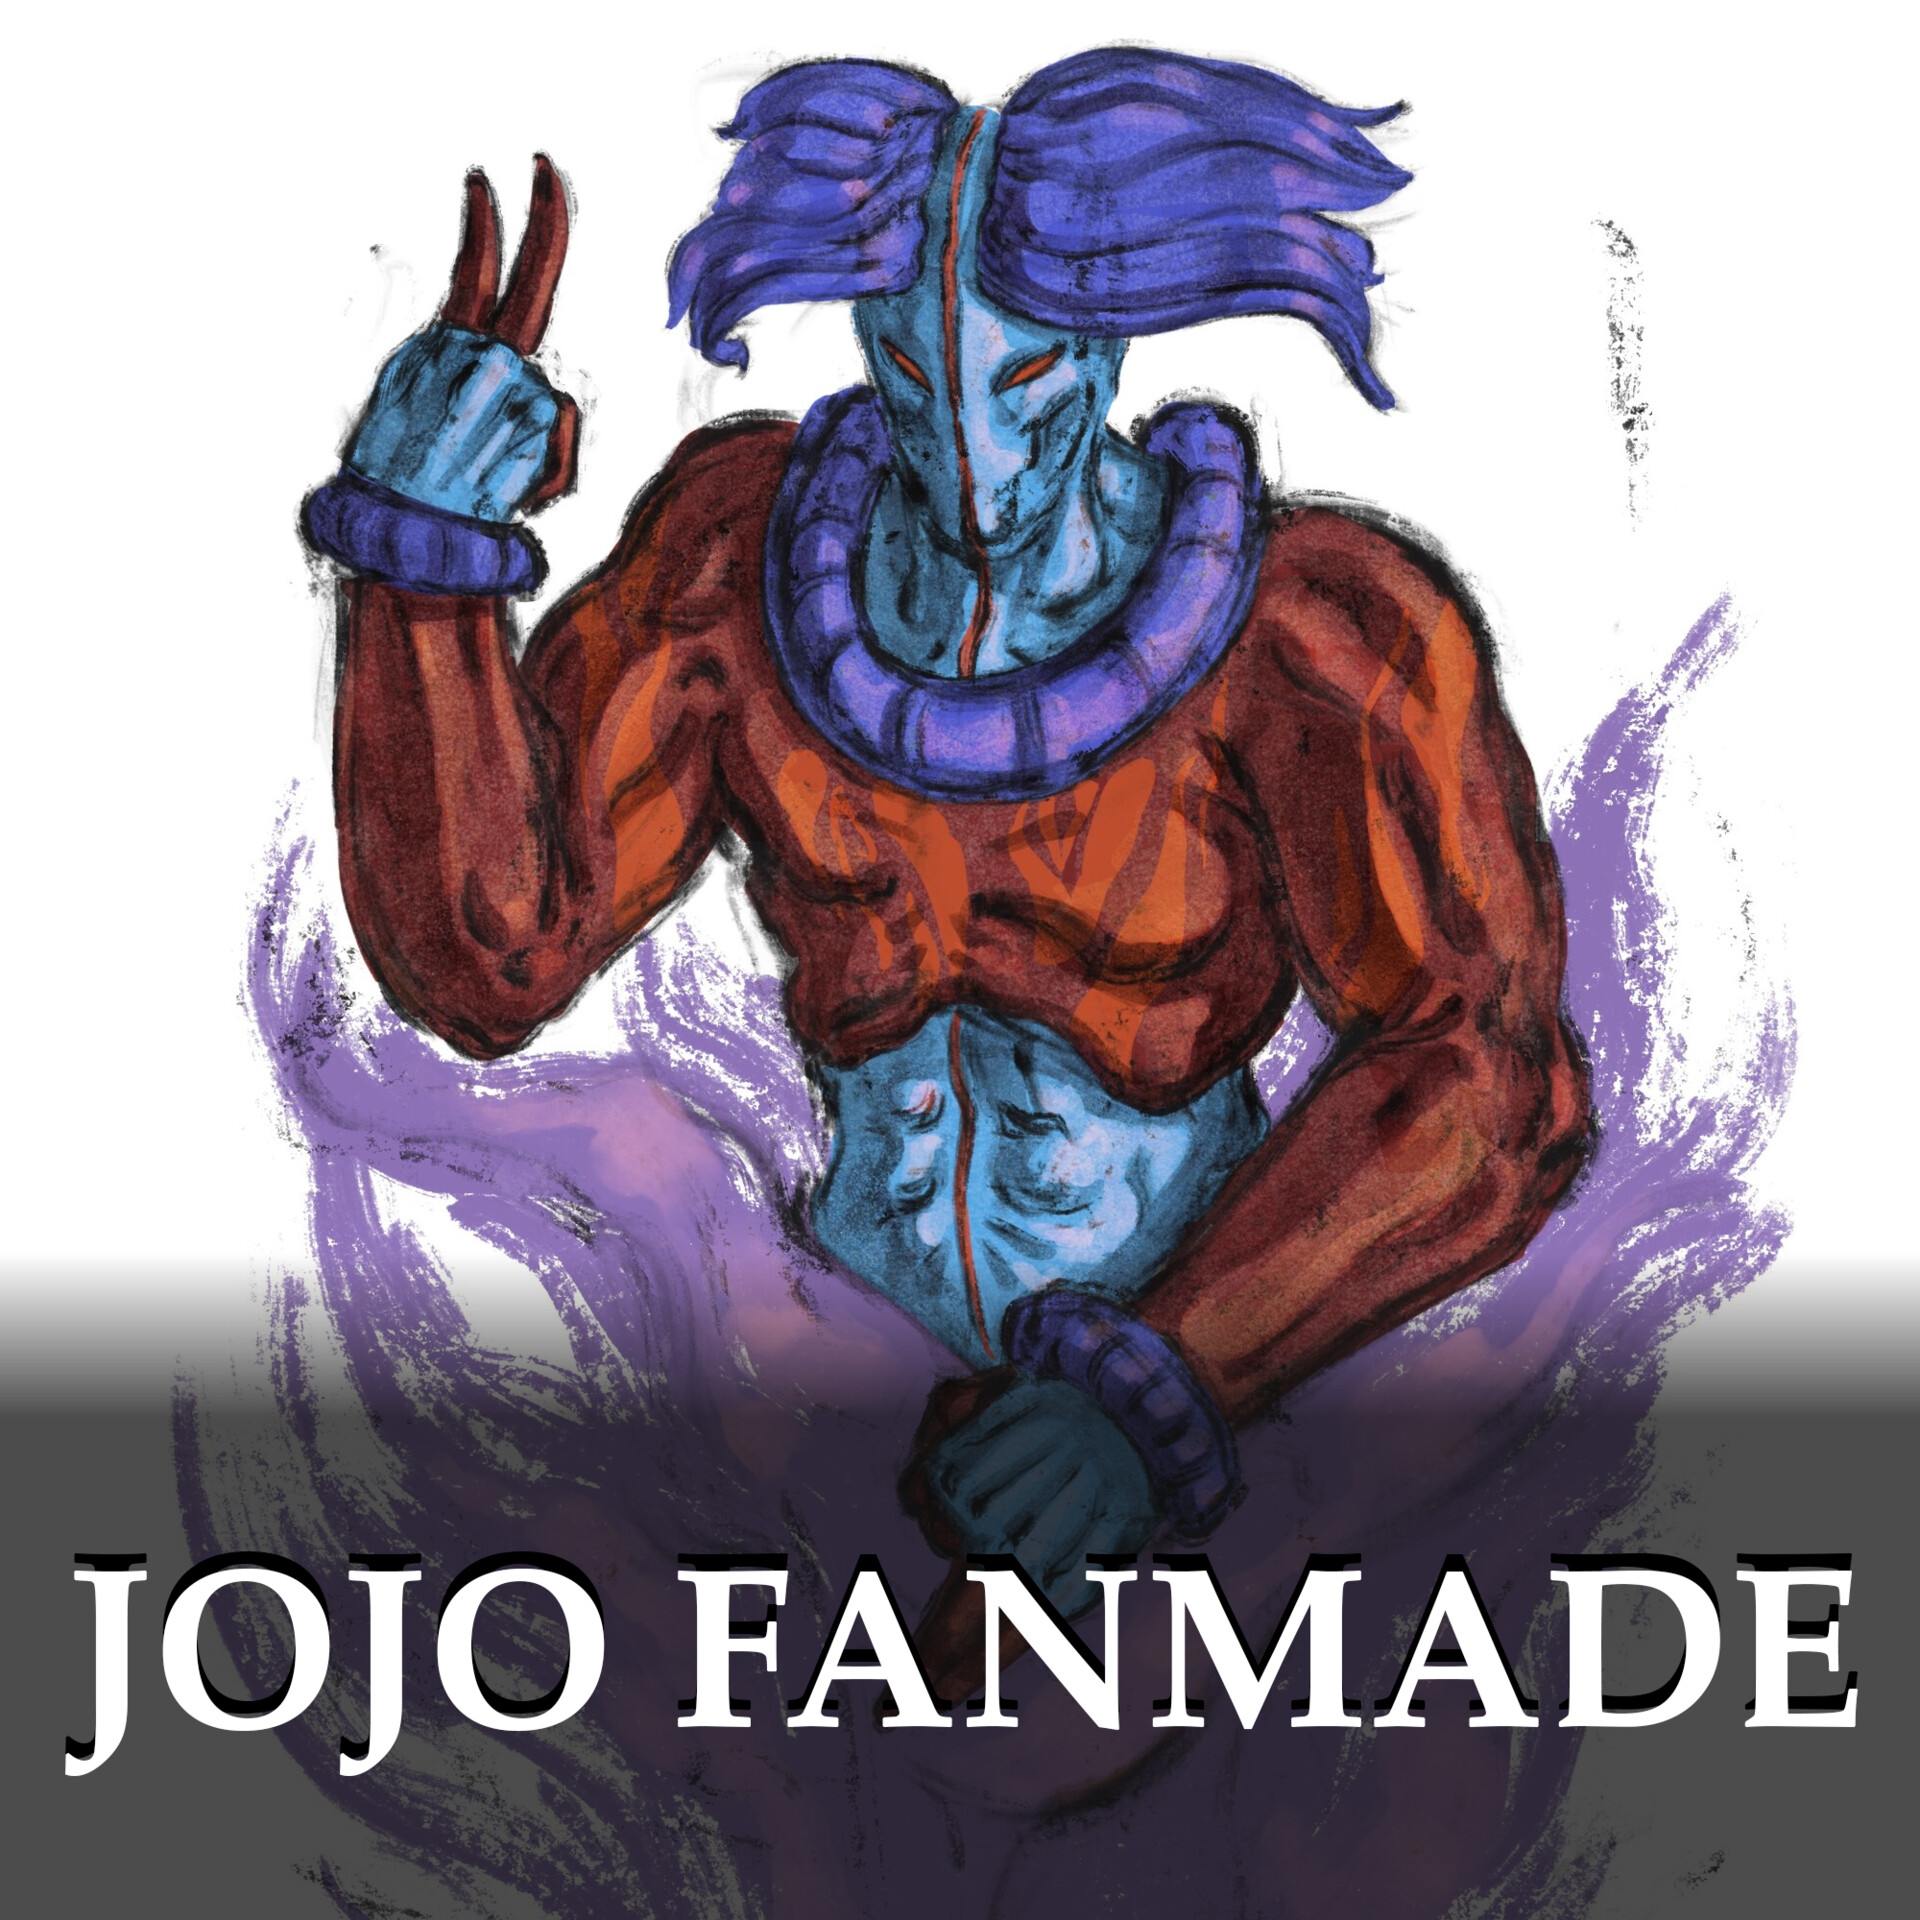 Jojo Fanmade Stand - 12 Groszy by Adamarcymag on DeviantArt